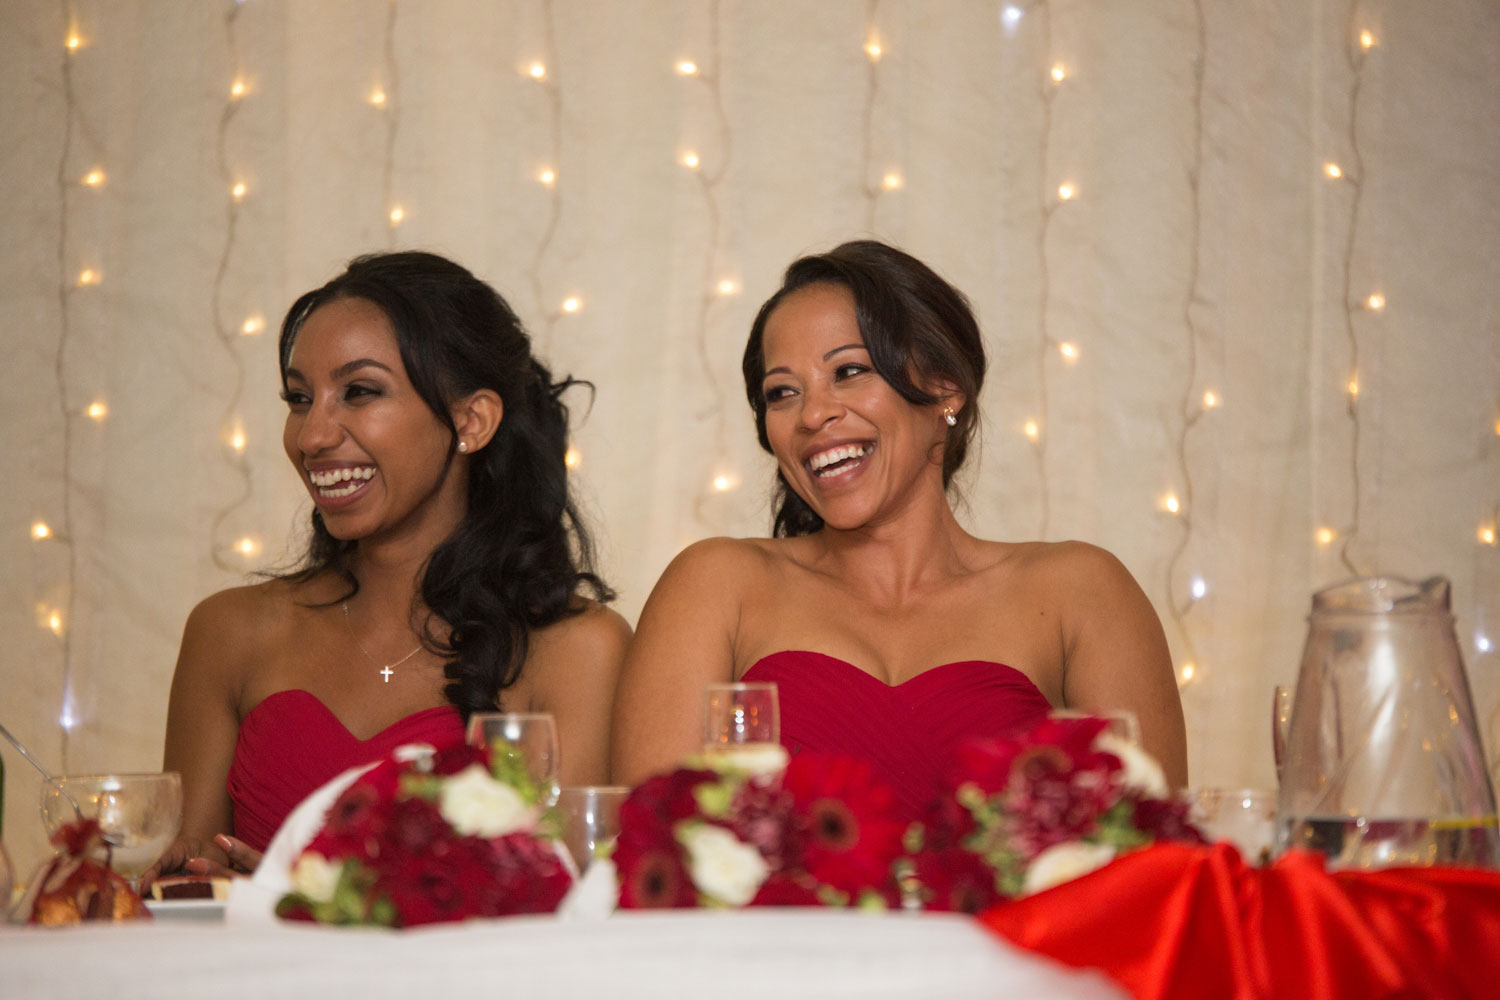 auckland wedding reception bridesmaids laughing